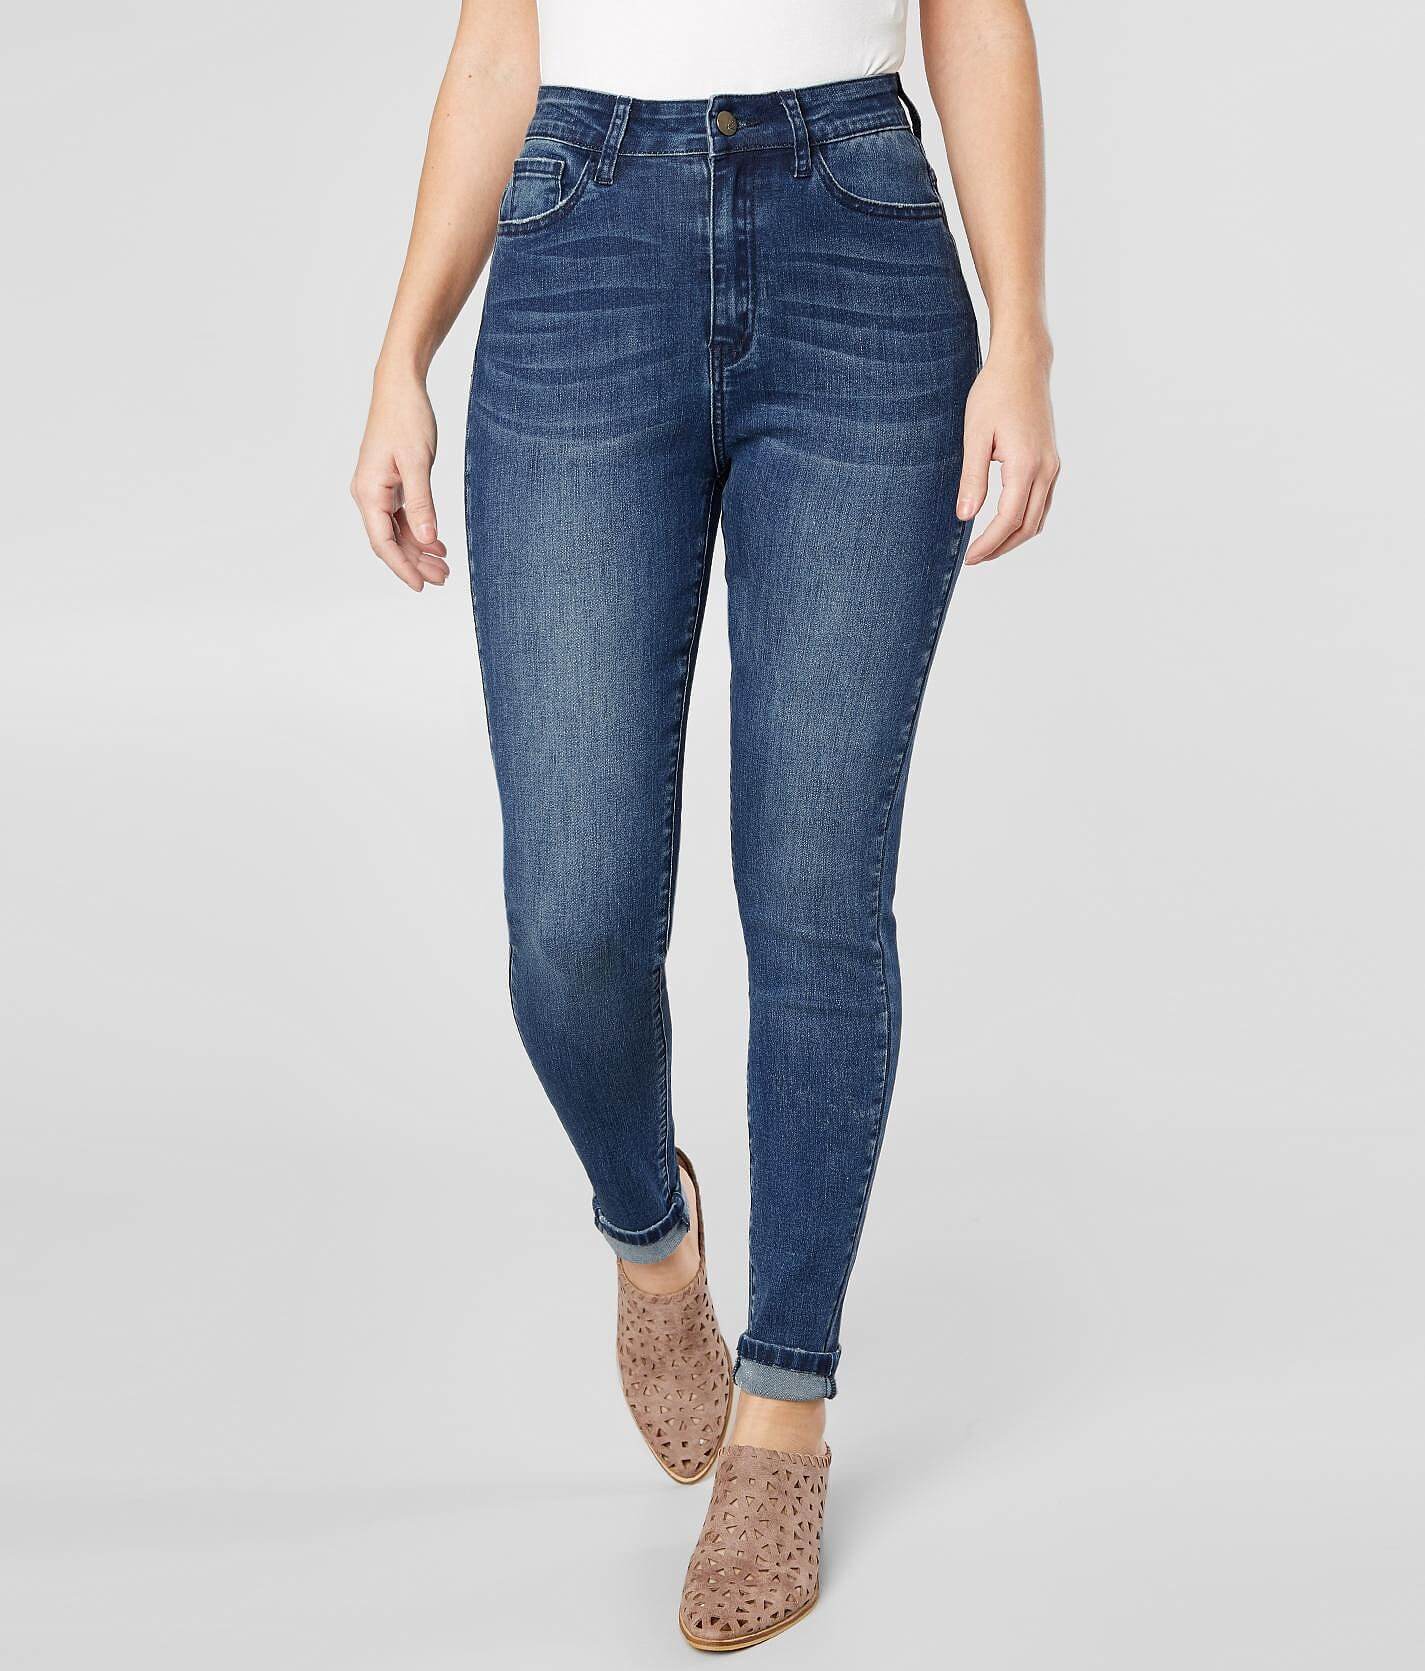 amazon torn jeans